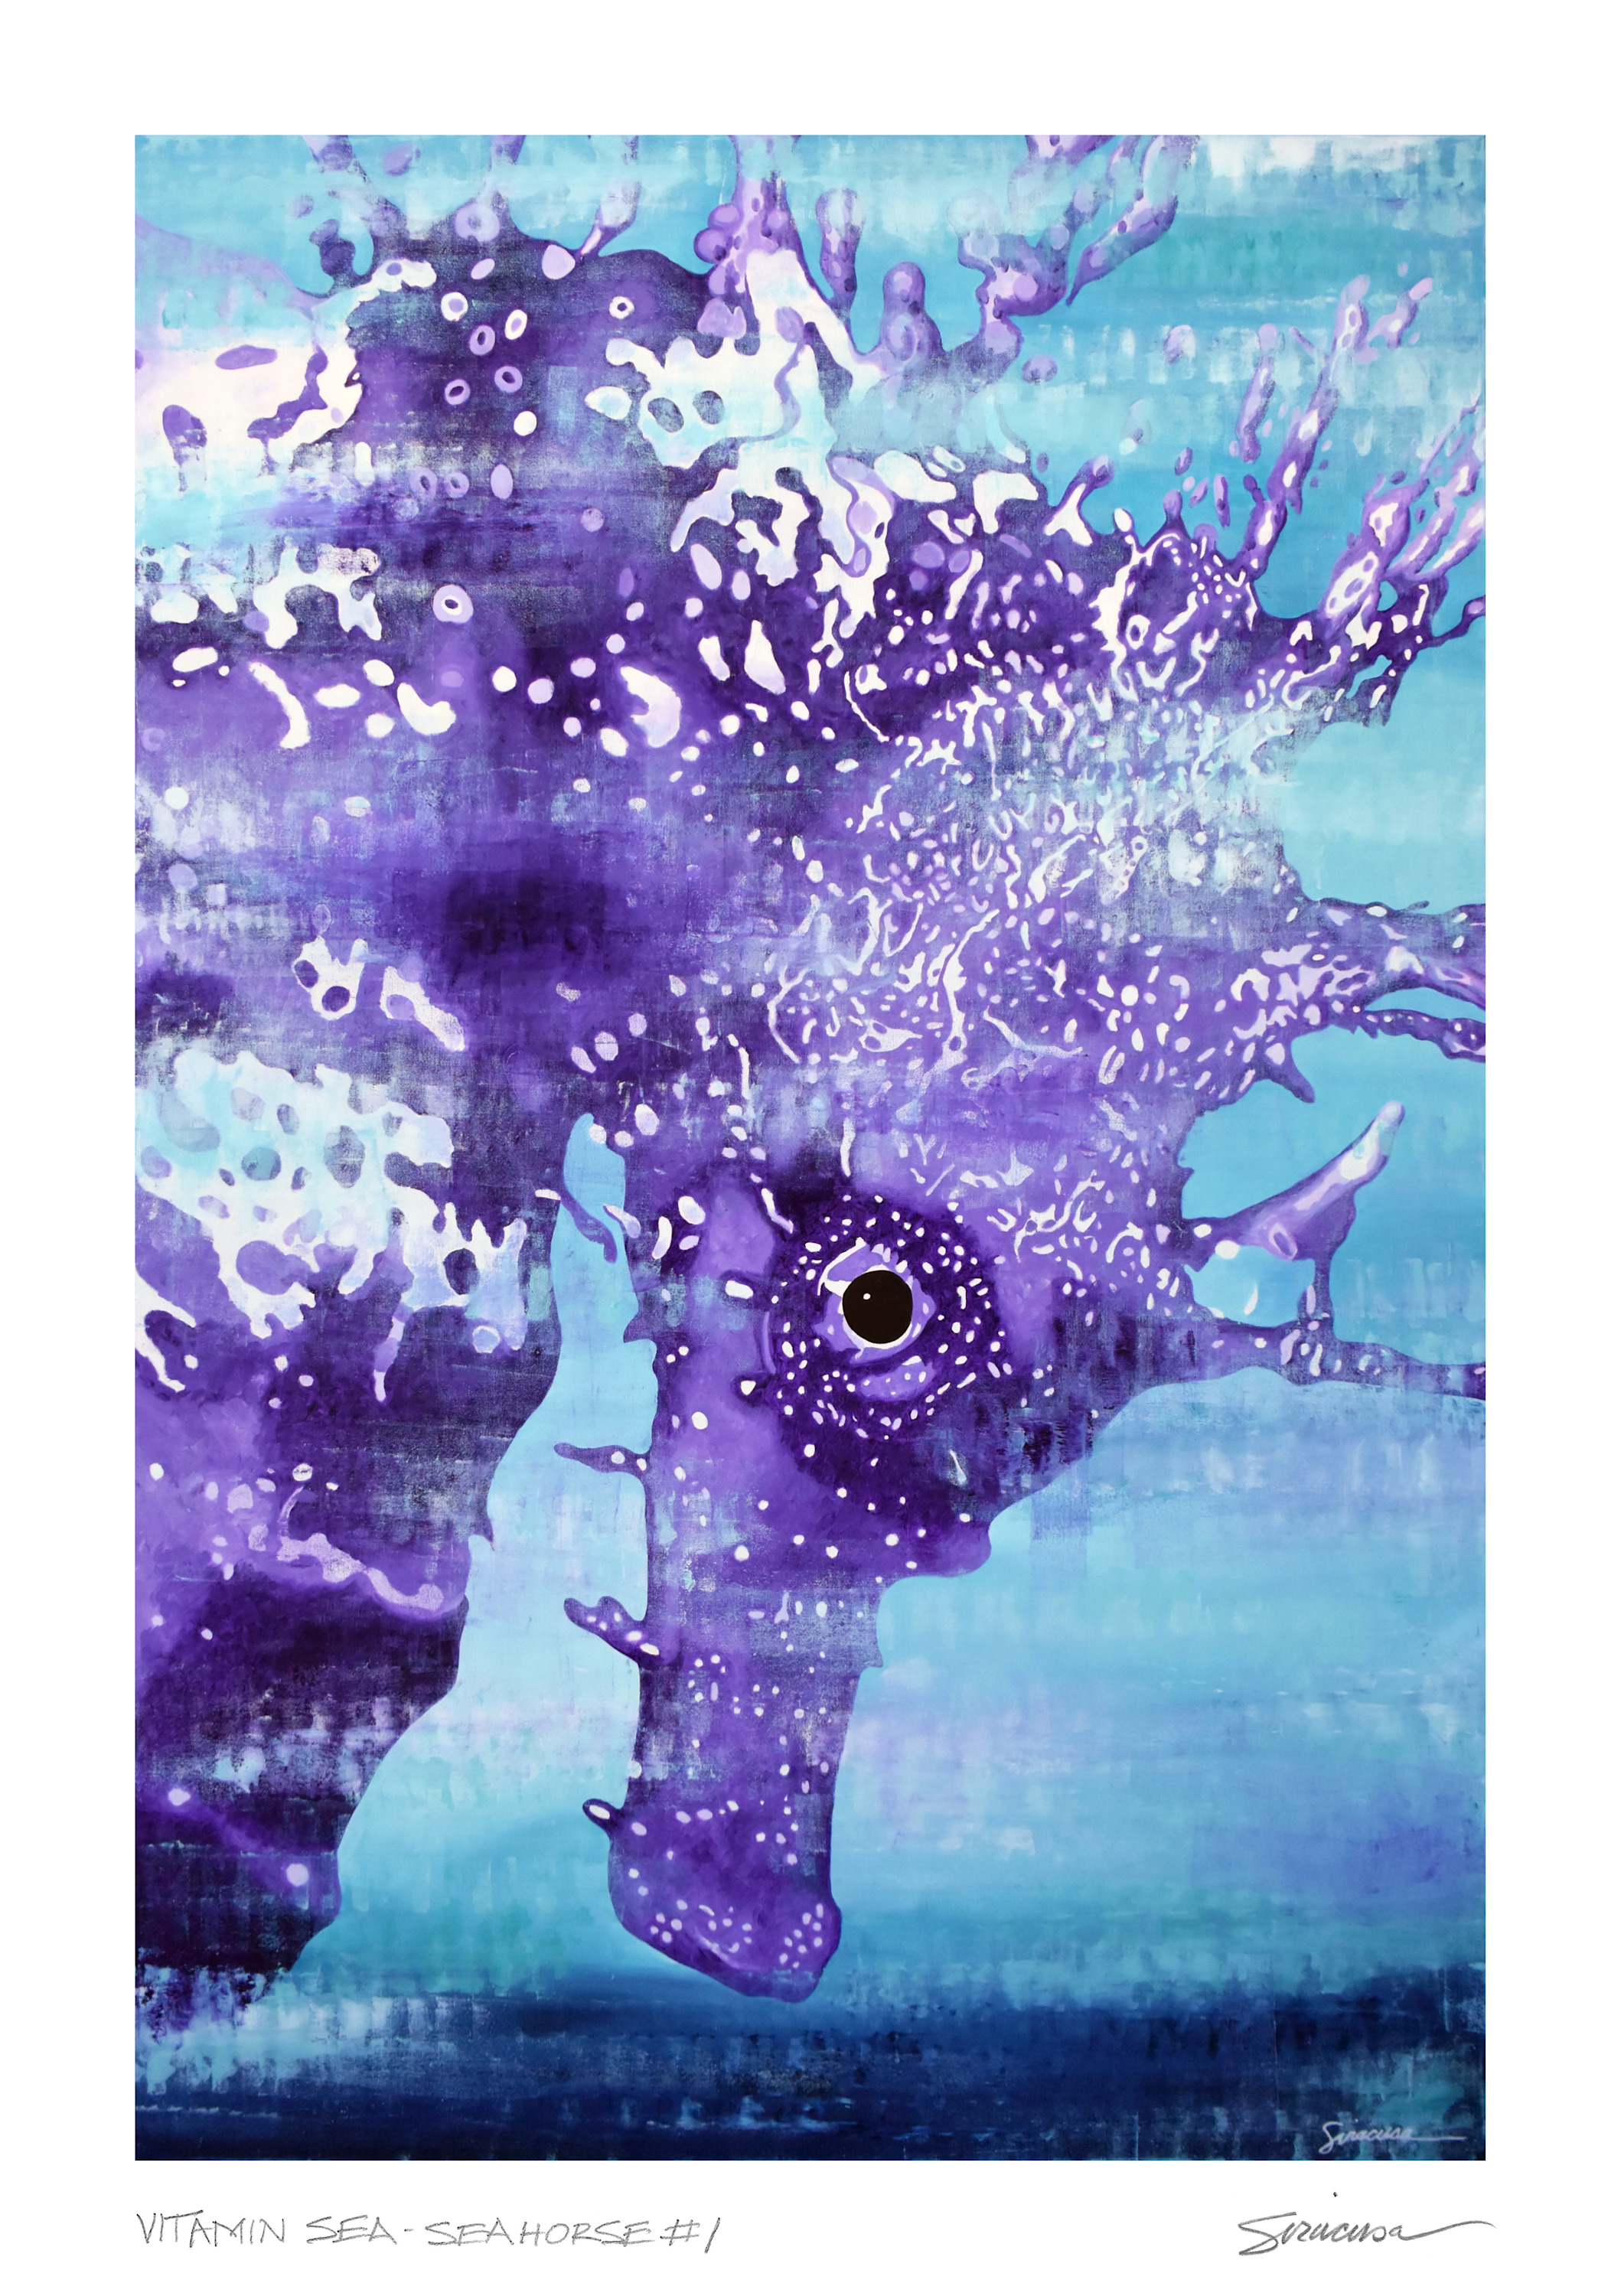 Vitamin sea   seahorse number 1 limited edition print kwu5xz